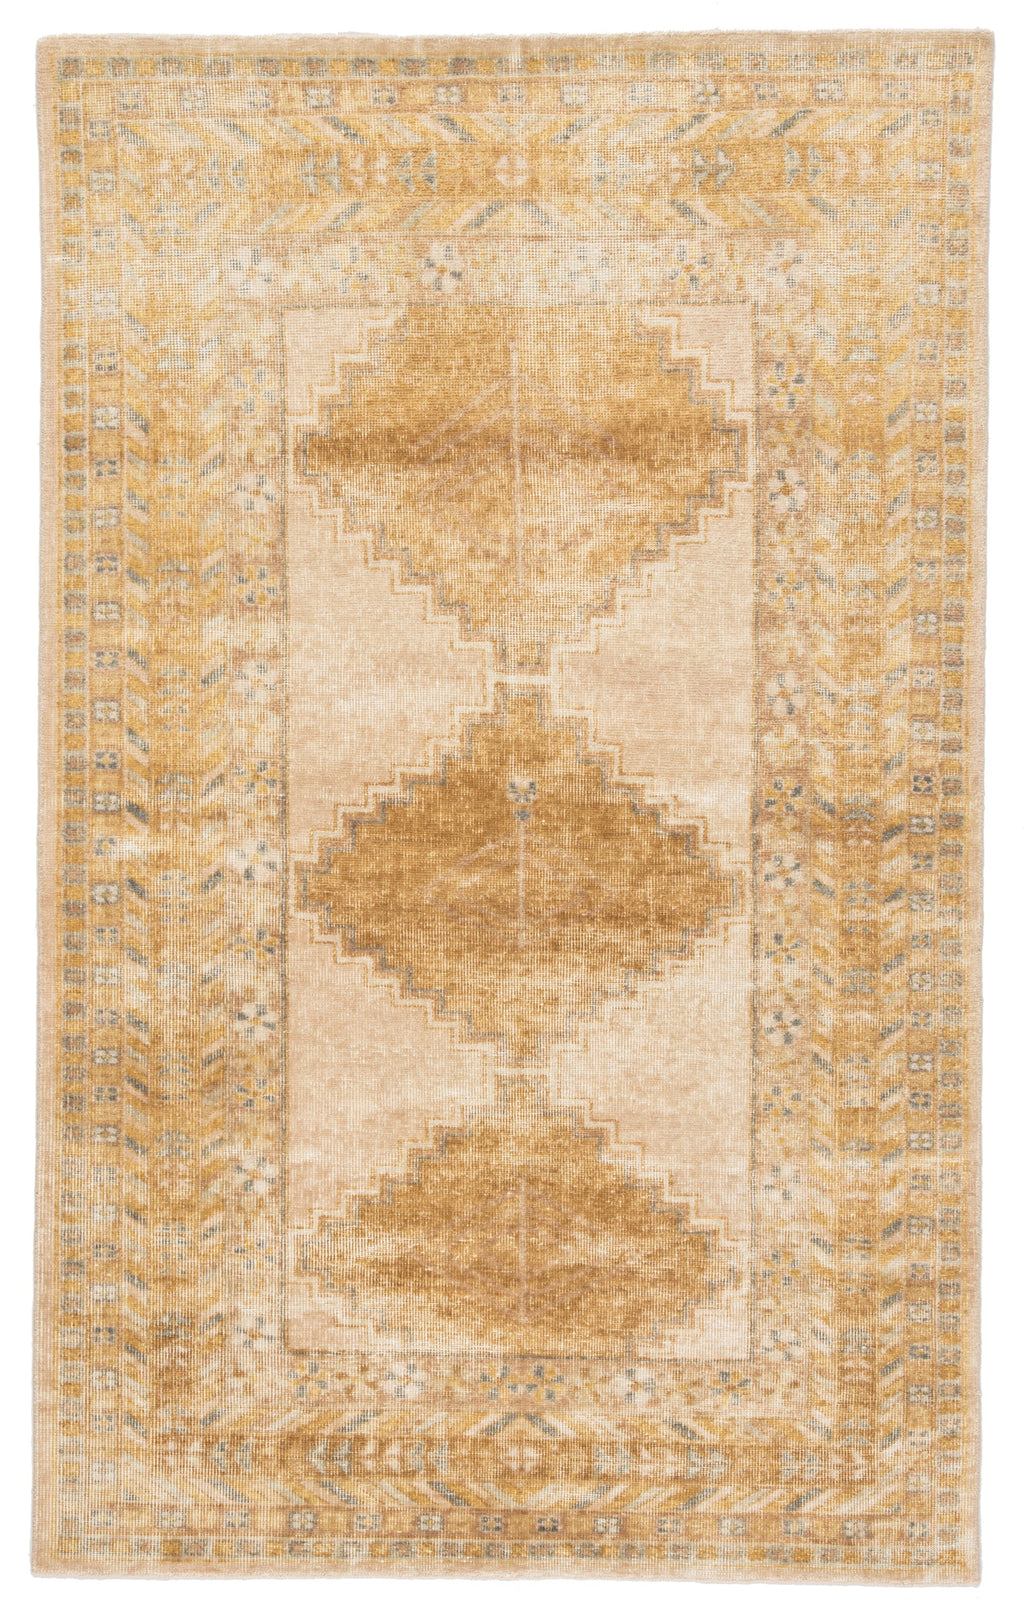 enfield medallion rug in honey mustard wood thrush design by jaipur 1